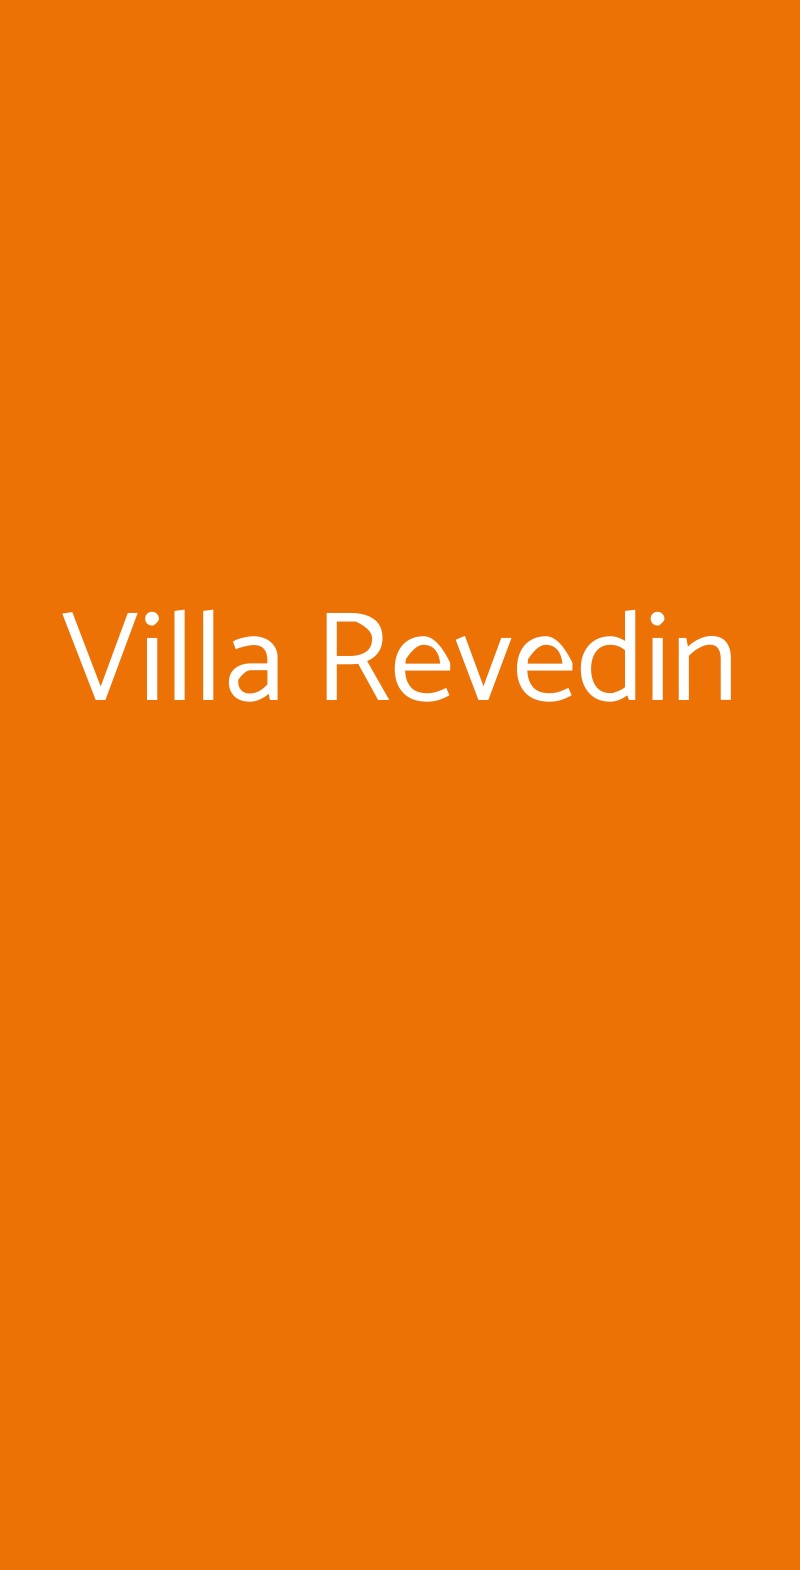 Villa Revedin Gorgo al Monticano menù 1 pagina